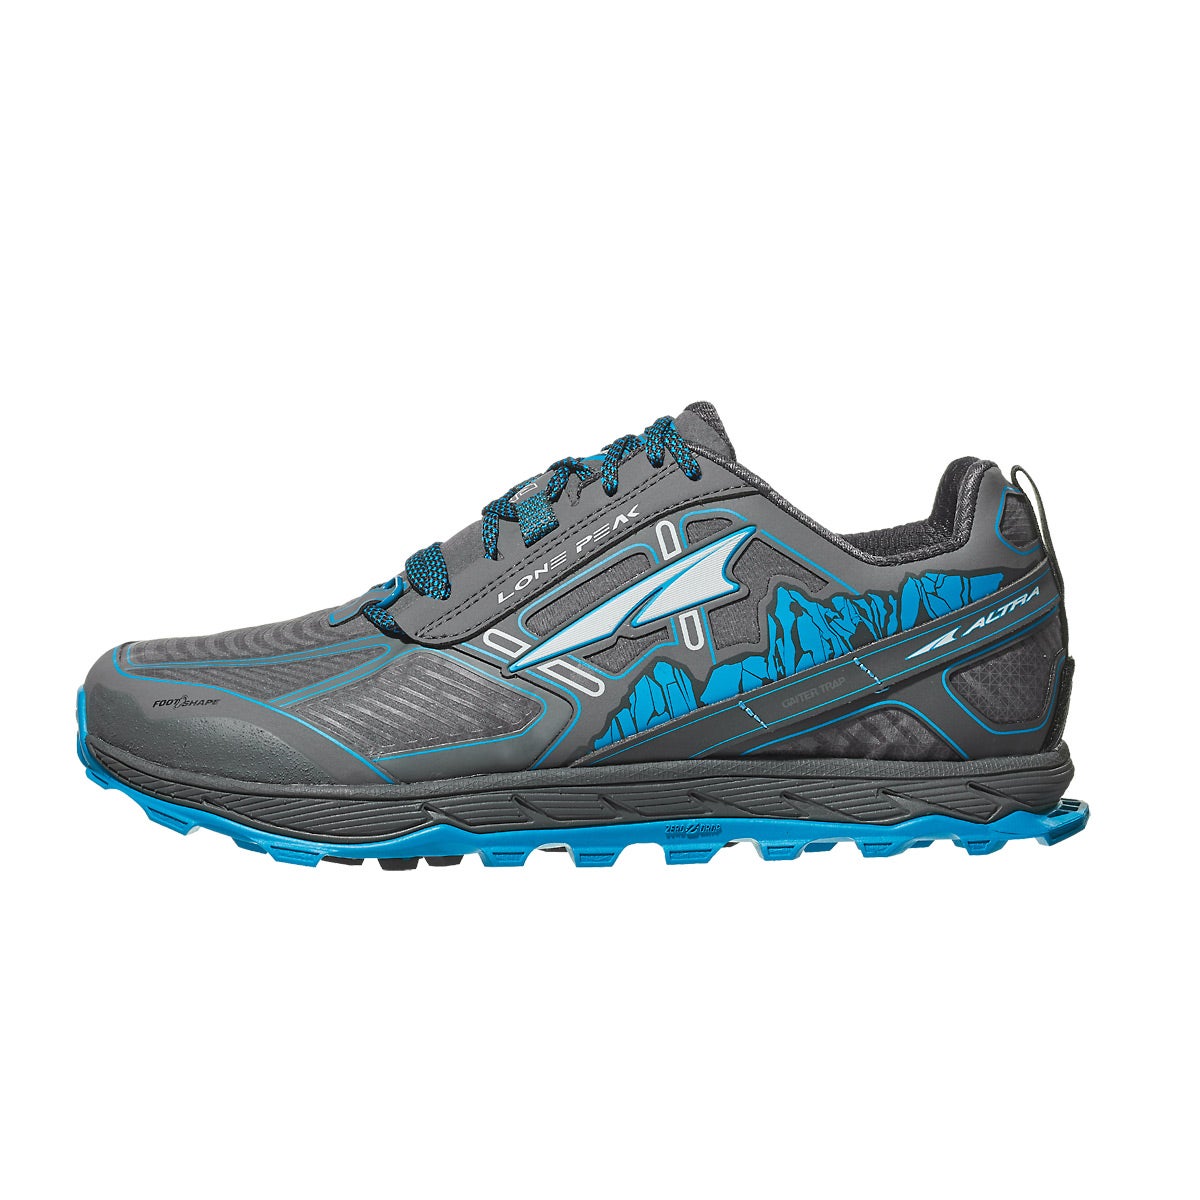 Altra Lone Peak 4.0 Low RSM Men's Shoes Grey/Blue 360° View | Running ...